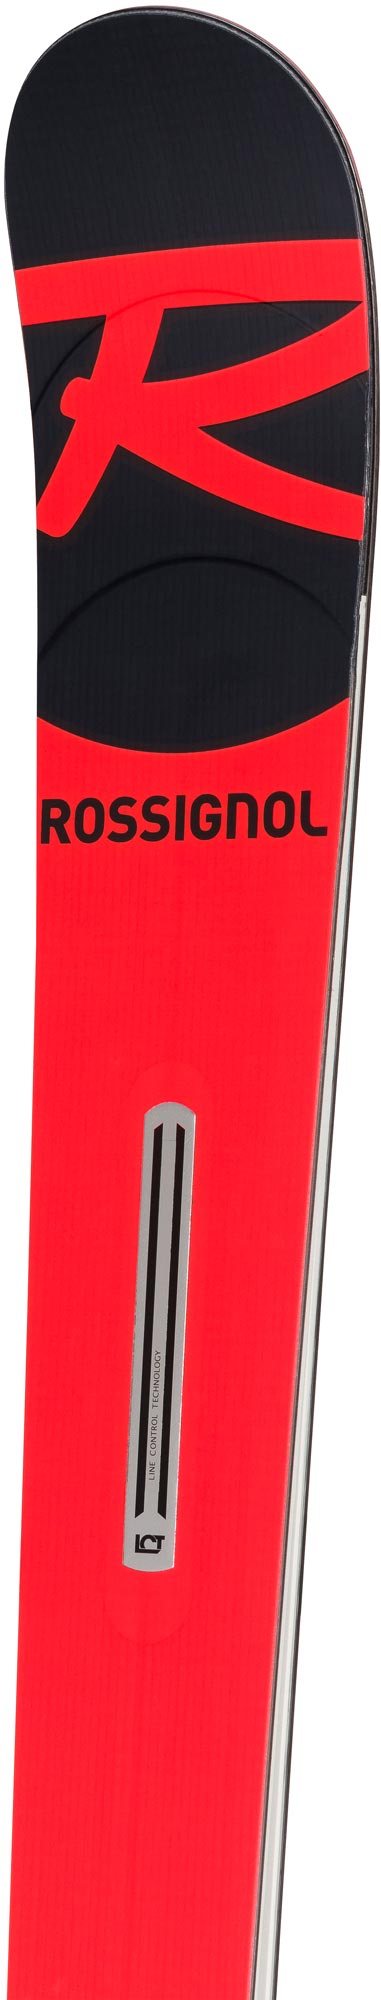 Rossignol Hero Athlete FIS GS Skis 2020 (R22) Non-FIS - The Boot Pro